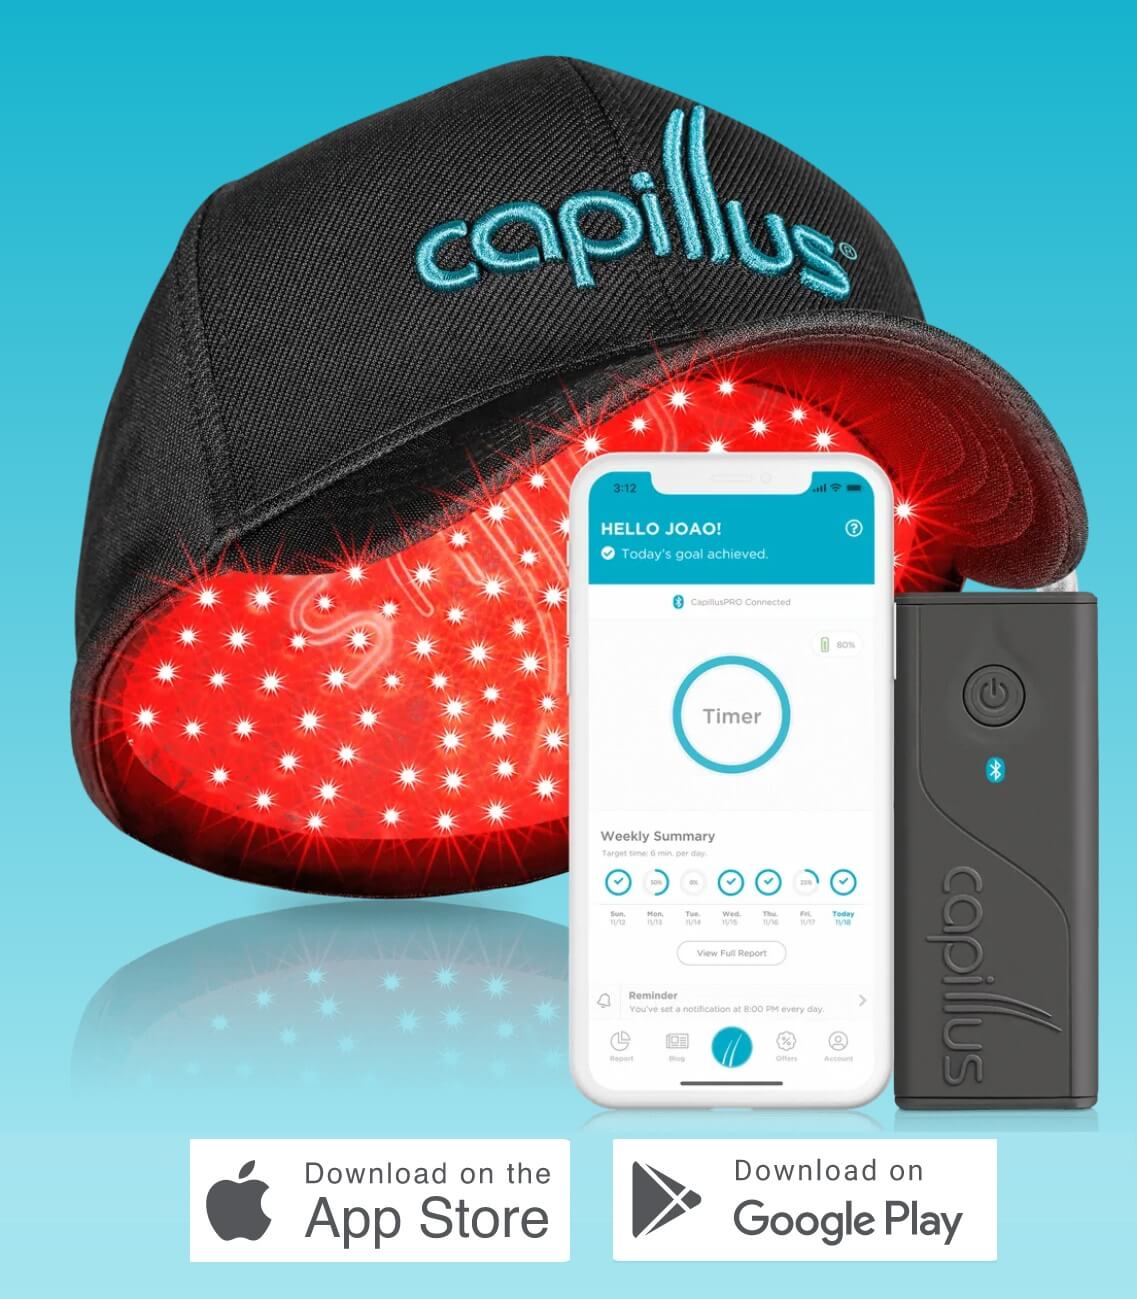 Capillus Pro S1 304 アプリ対応モデル – Capillus Japan